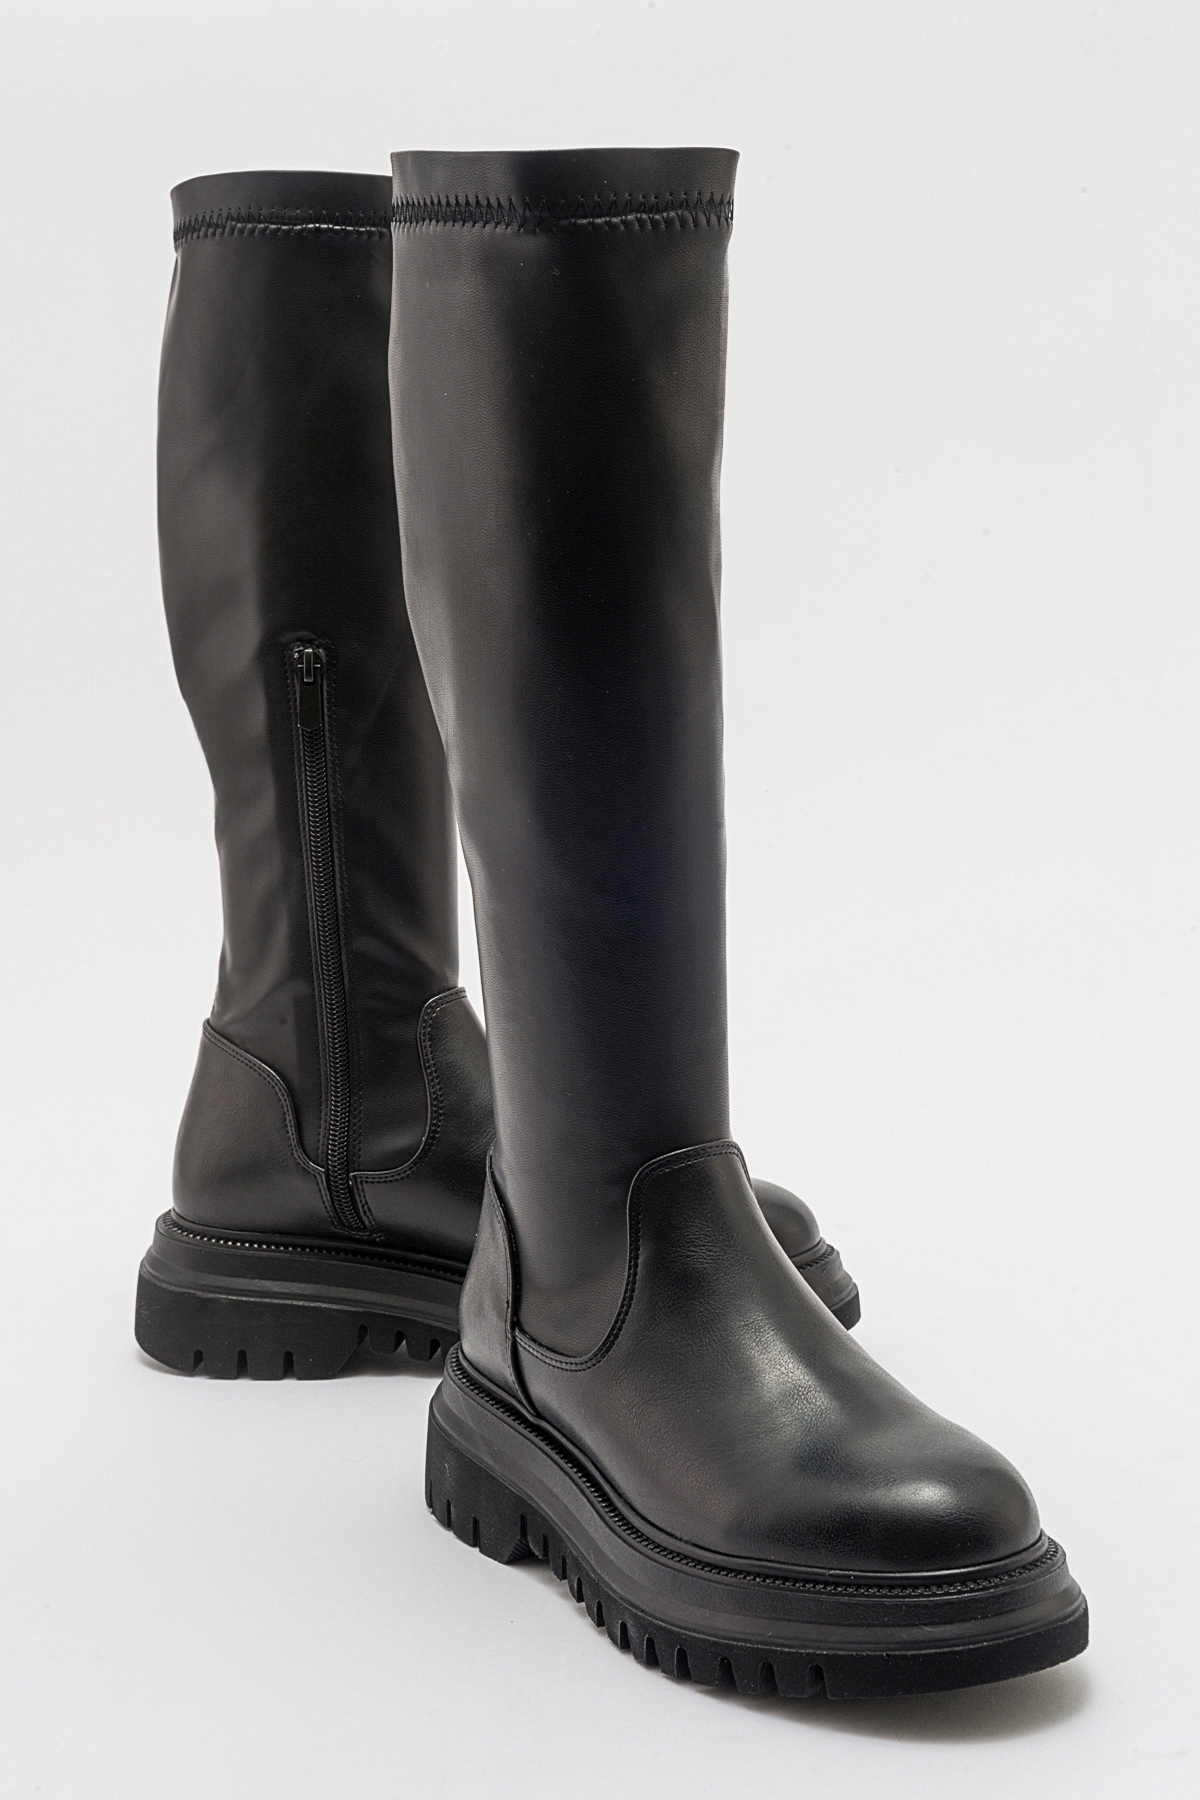 LuviShoes HENİN Black Stretch Women's Knee High Flat Boots